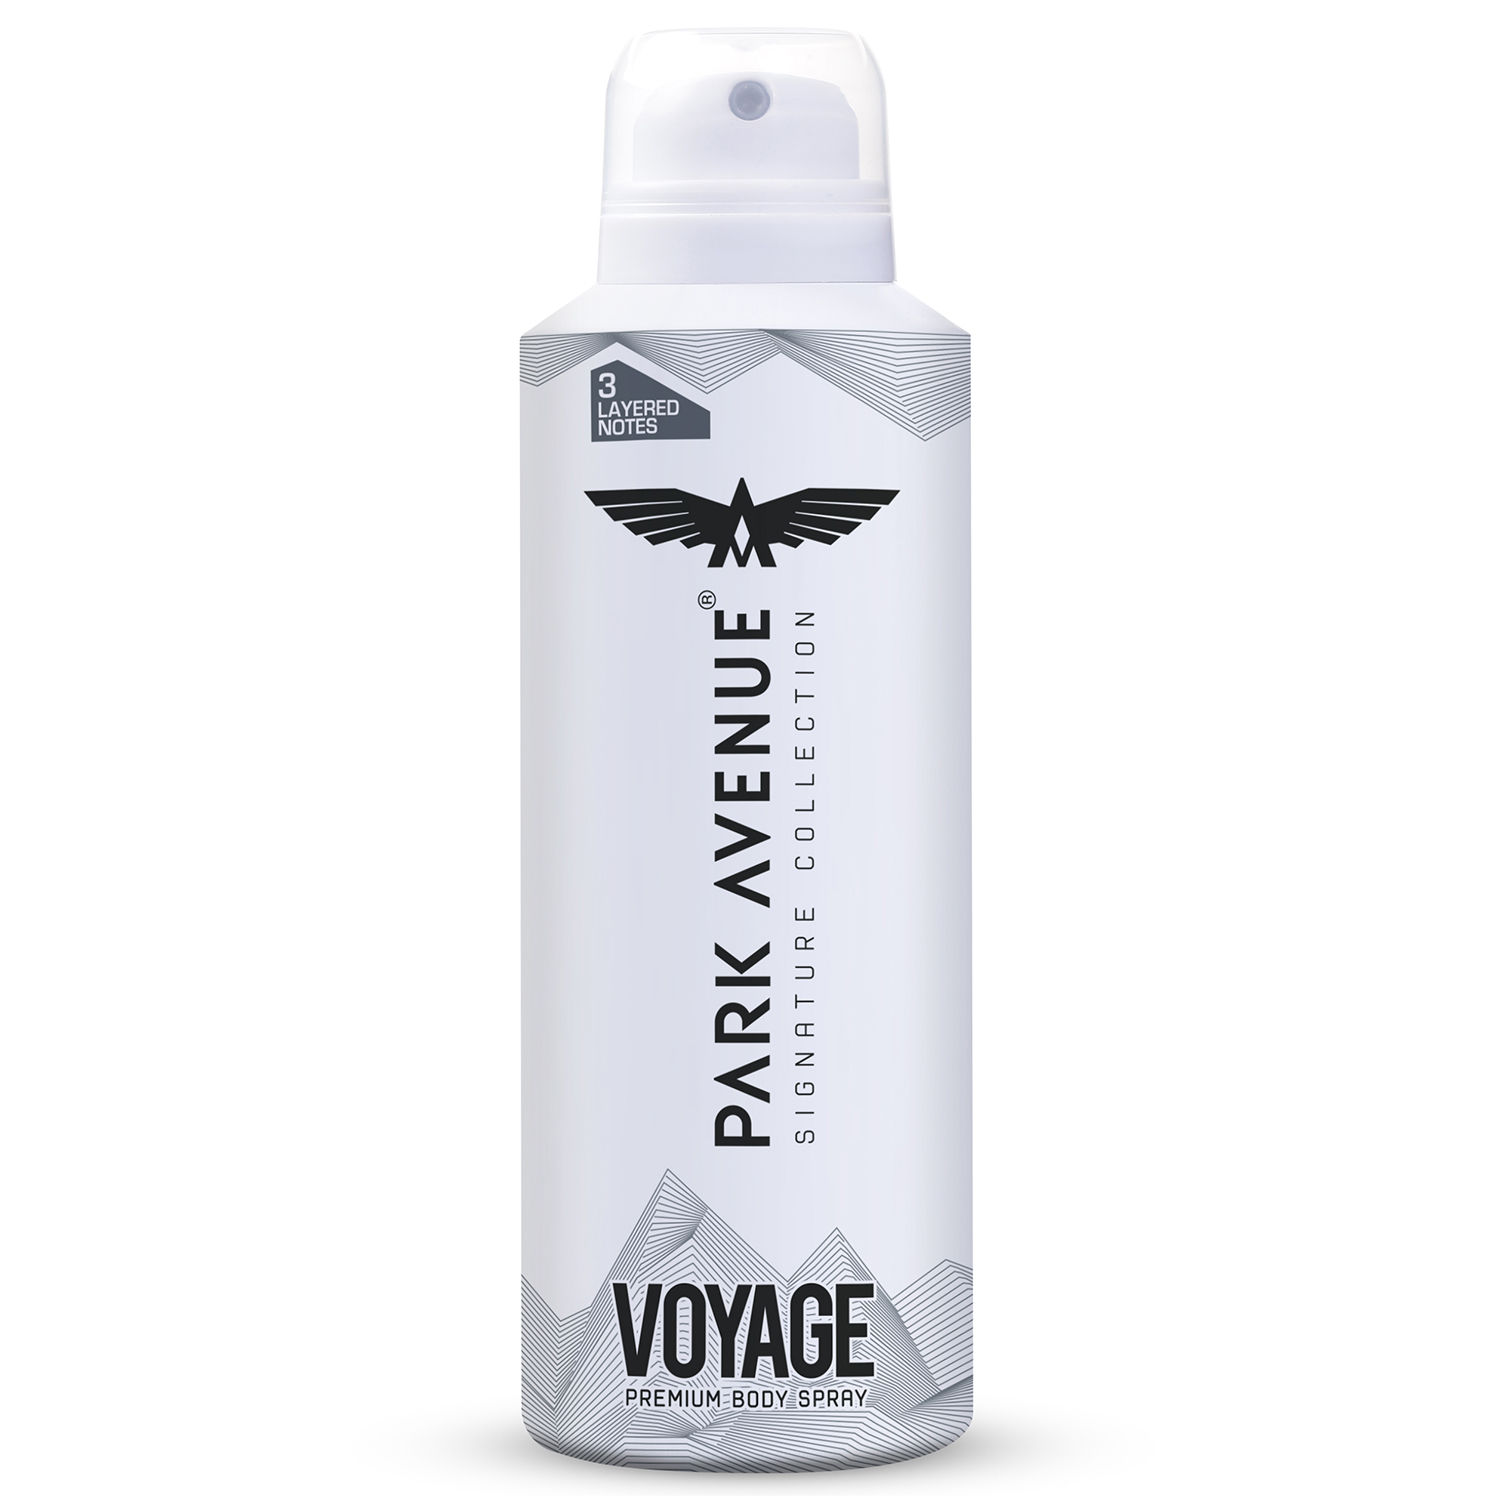 Park Avenue Signature Collection Voyage Premium Body Spray